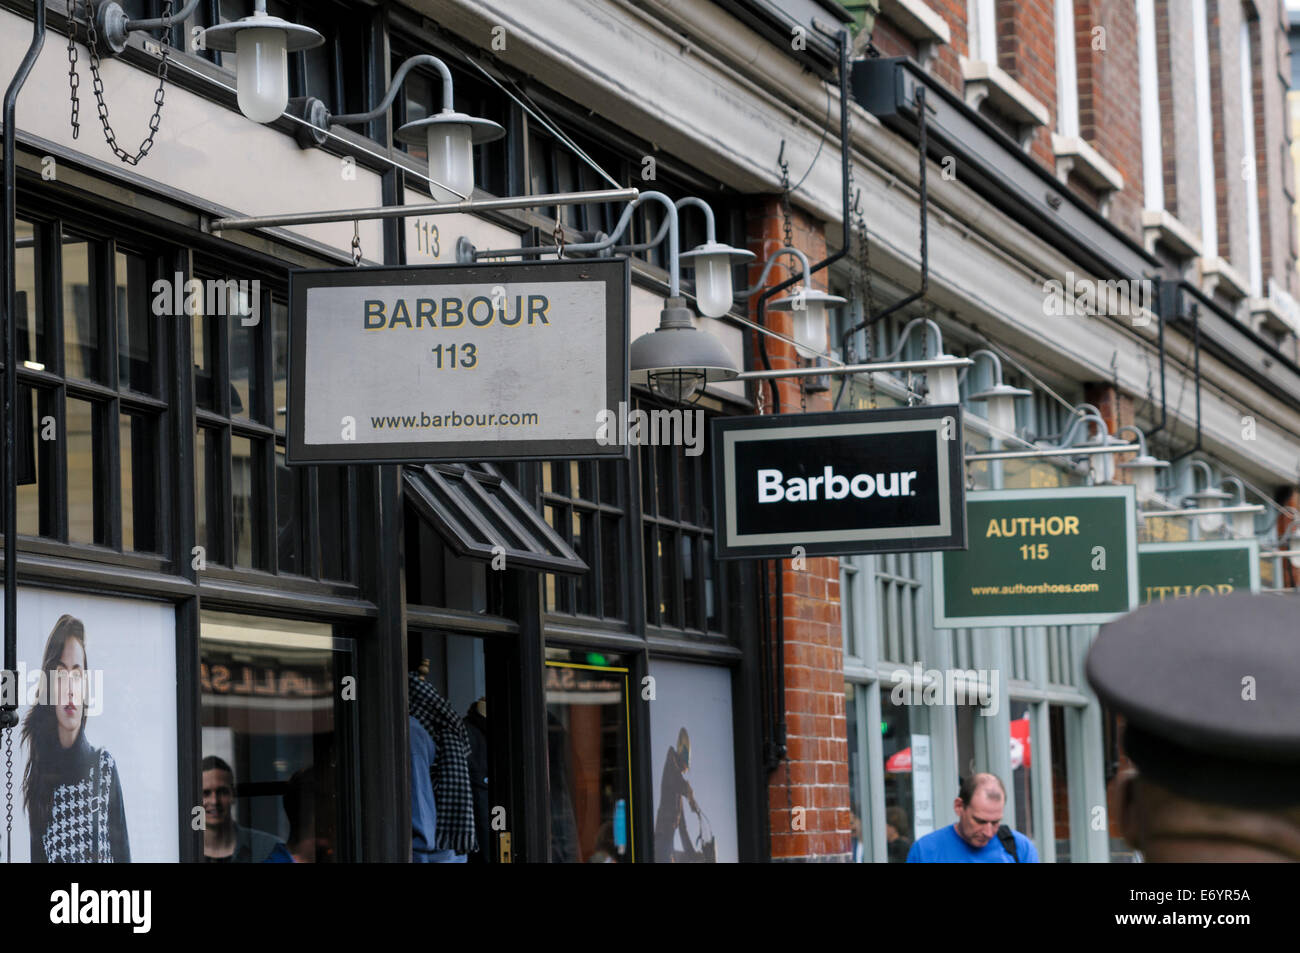 BARBOUR Shop in Spitafields, London, UK Stock Photo - Alamy